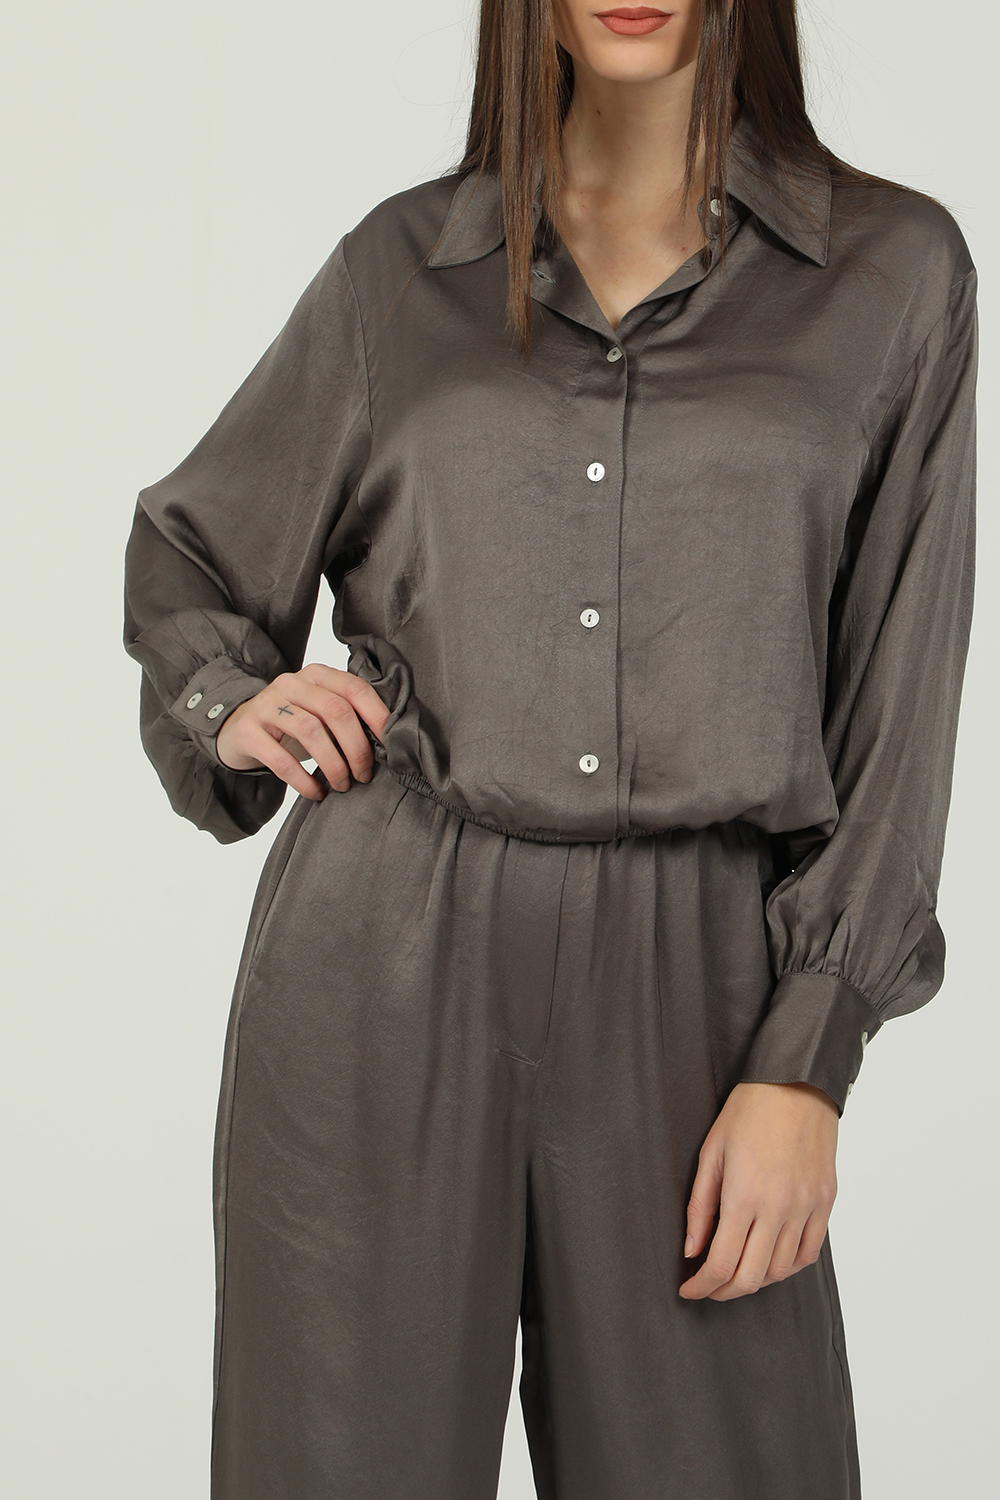 AMERICAN VINTAGE – Γυναικειο πουκαμισο AMERICAN VINTAGE WID06C εκρου μεταλλικο